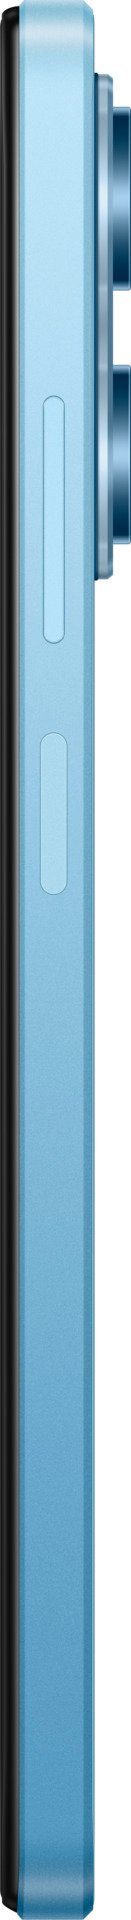 Speicherplatz, GB 6GB+128GB Blau 5G 128 Pro cm/6,67 X5 Kamera) (16,9 MP Zoll, POCO 108 Smartphone Xiaomi